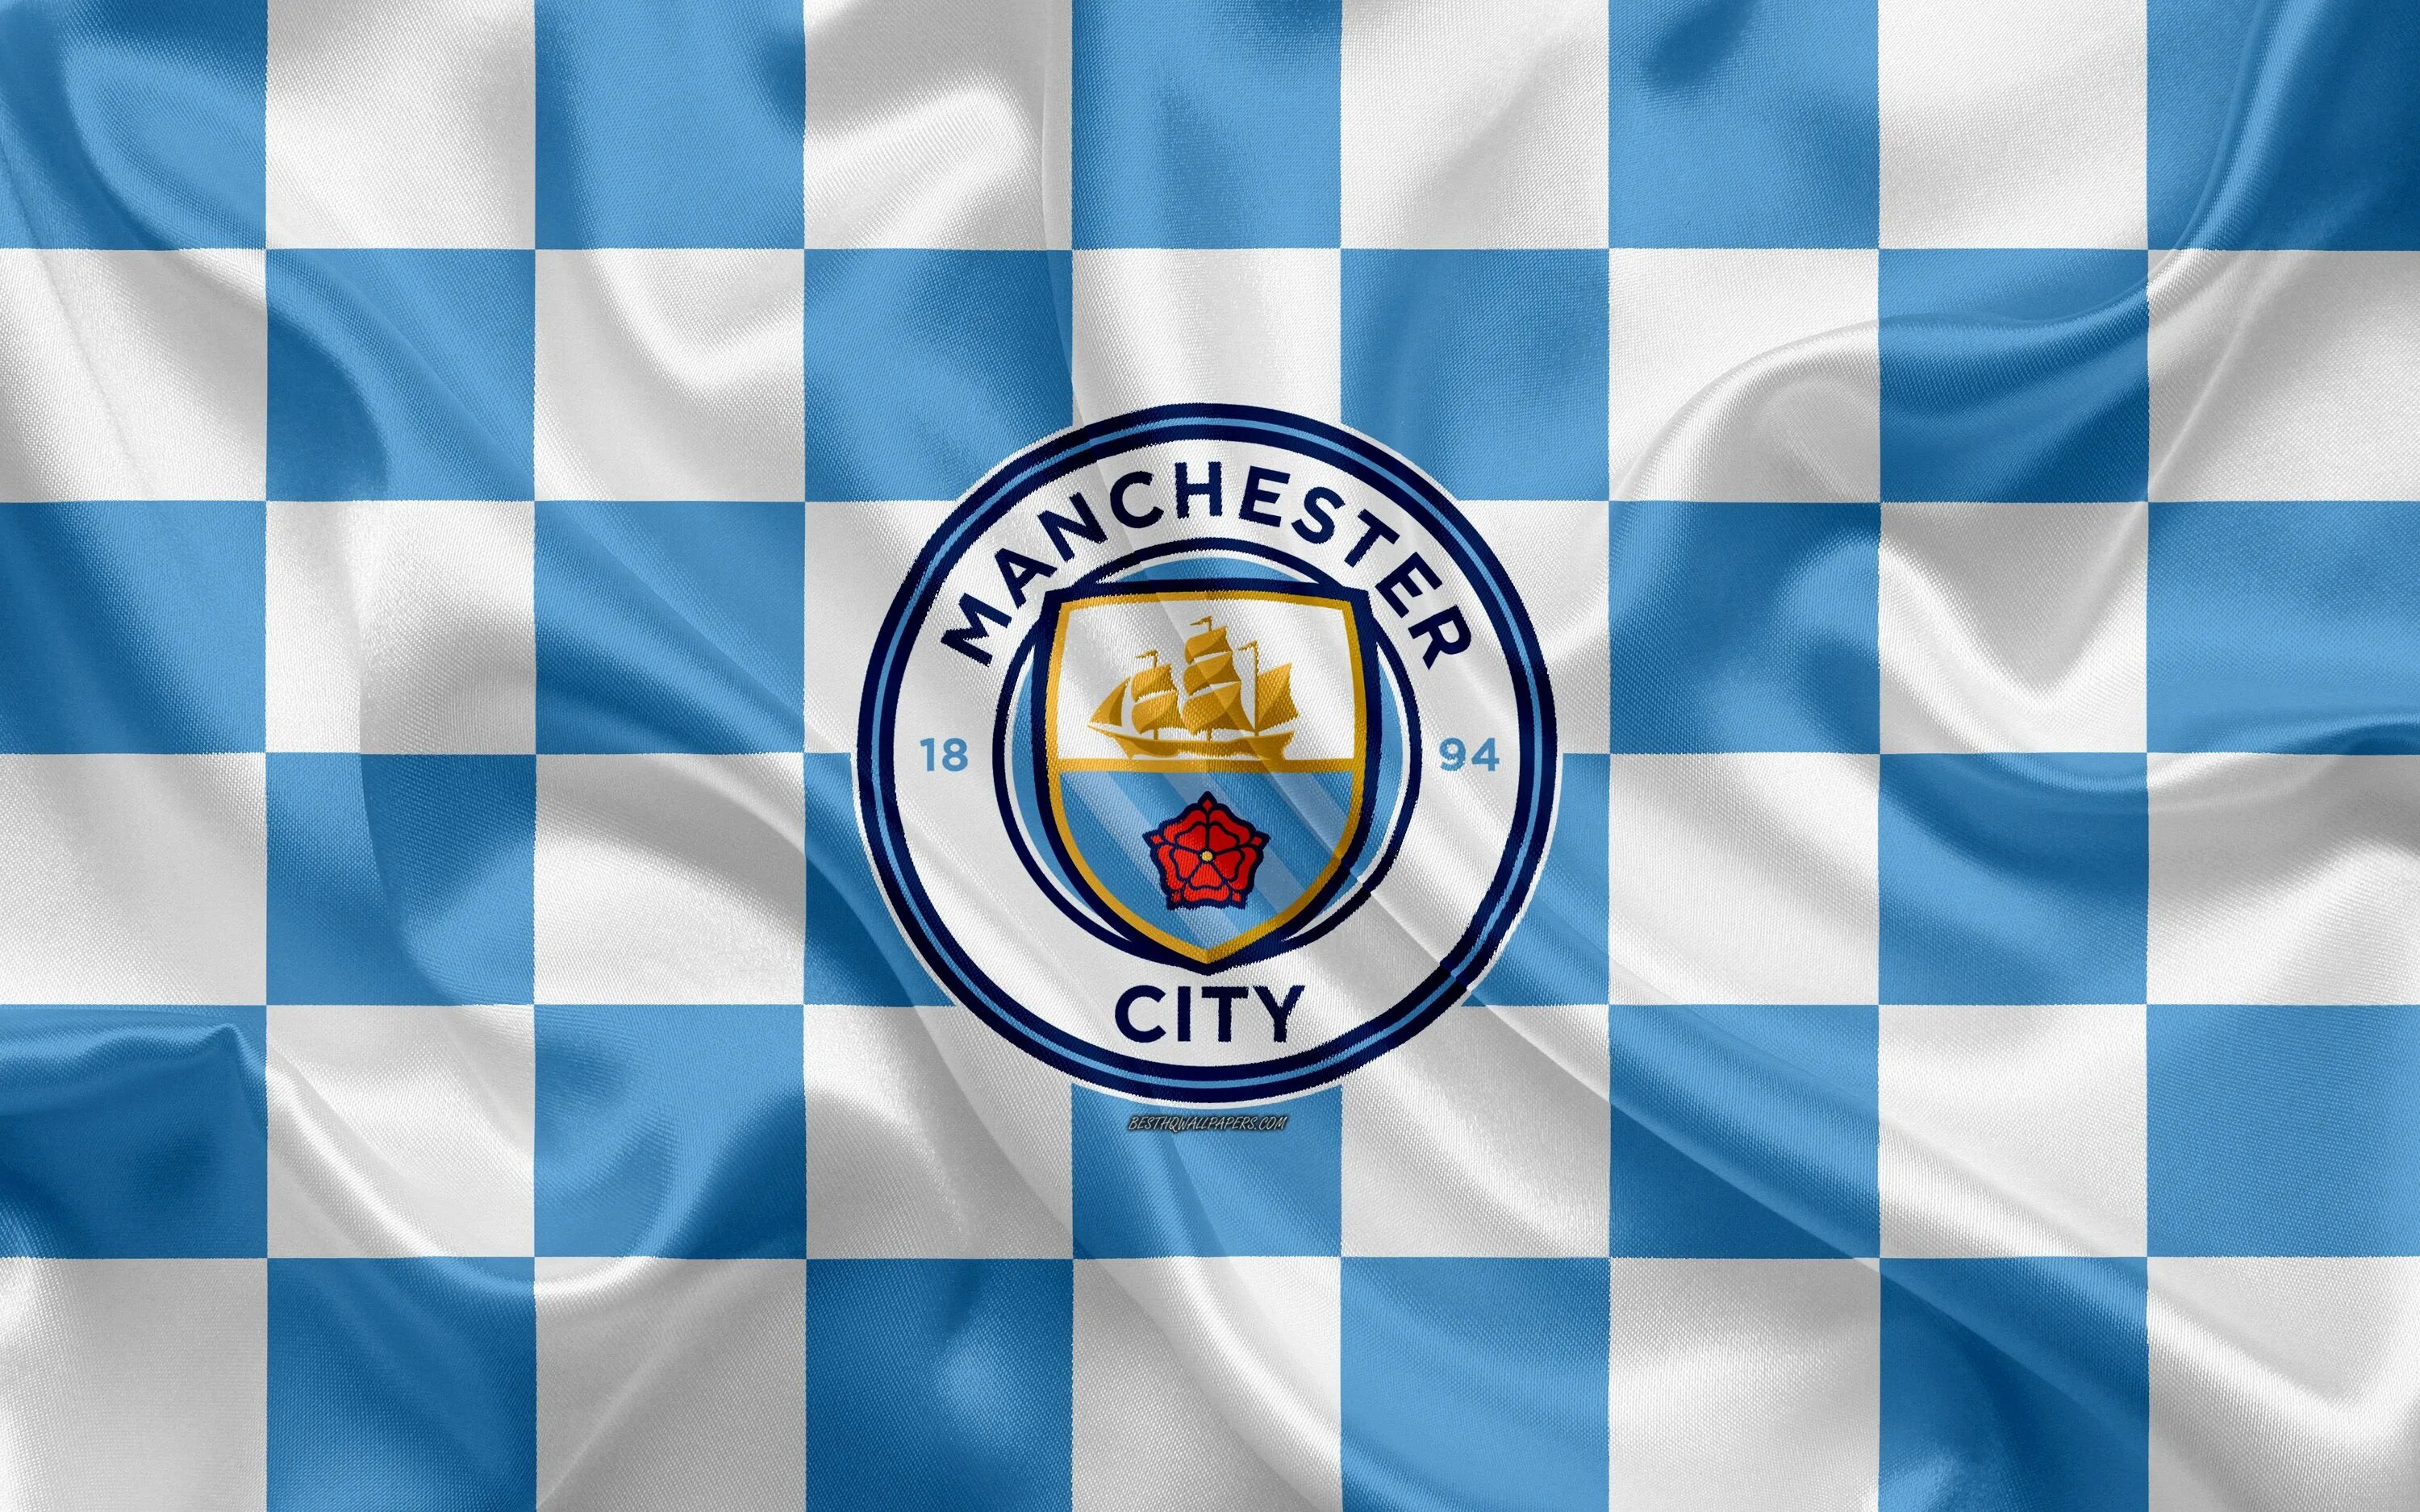 1.4 f c. Флаг ФК Манчестер Сити. Футбольный клуб Манчестер Сити. Флаг футбольного клуба Манчестер Сити. Футбольный клуб Манчестер Сити логотип.